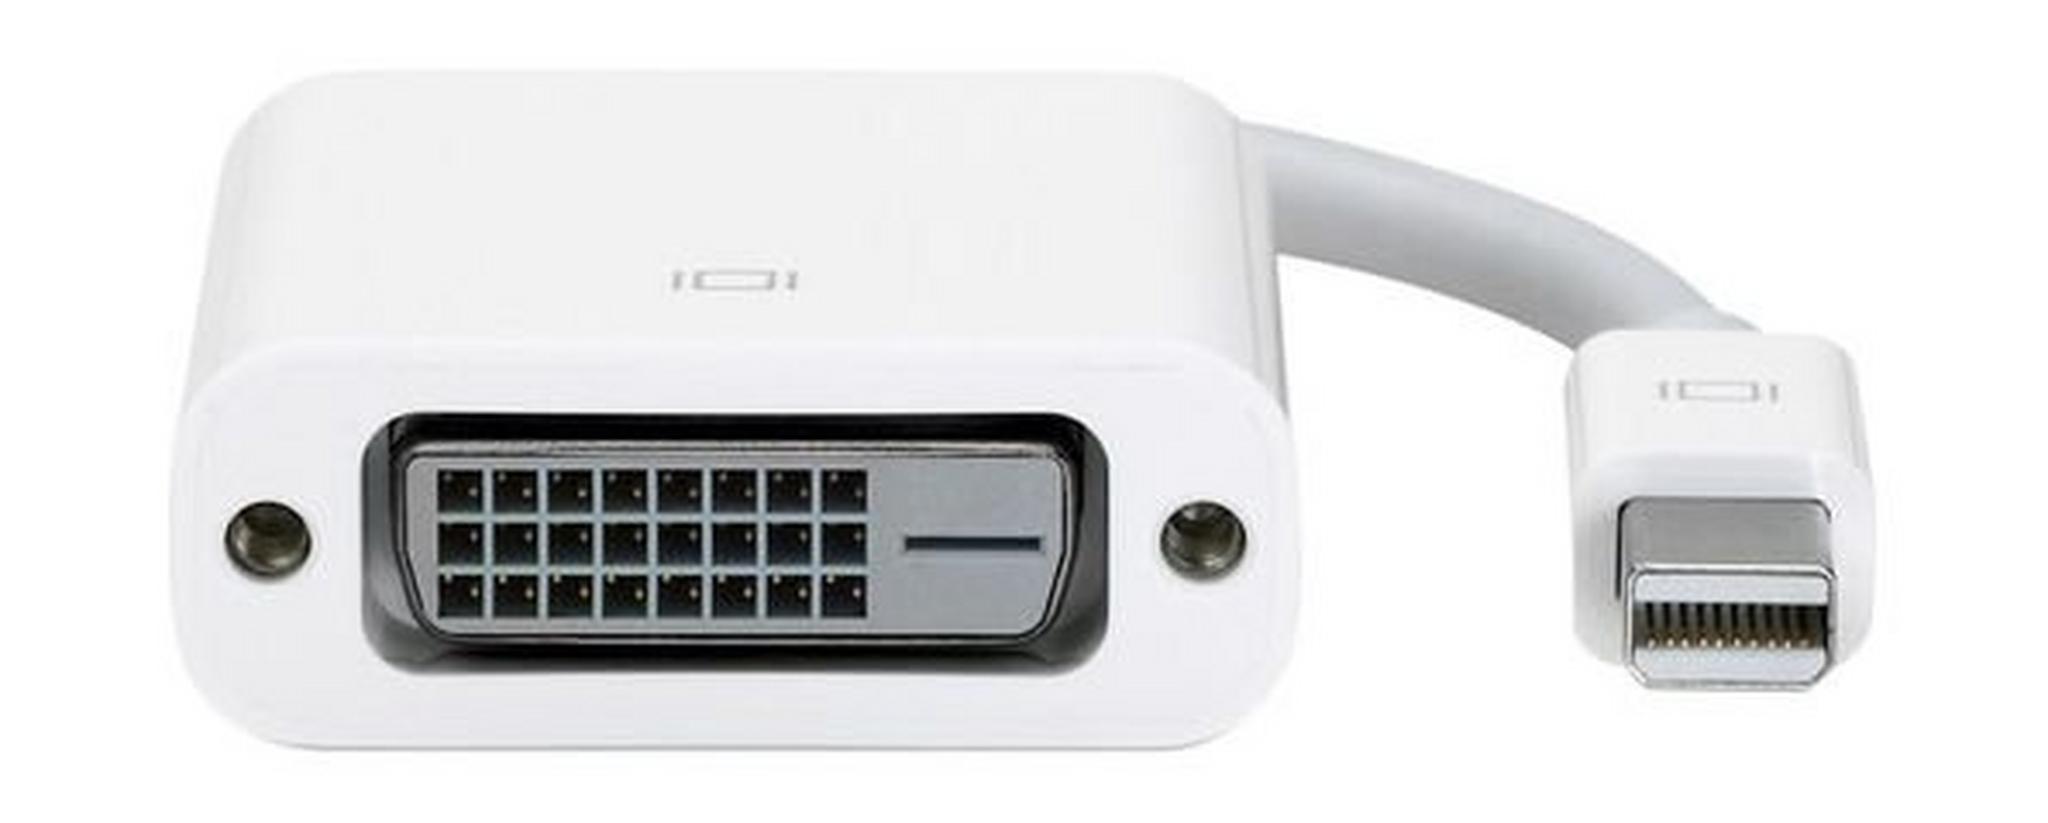 Apple MB570Z/B Mini DisplayPort to DVI Adapter - White